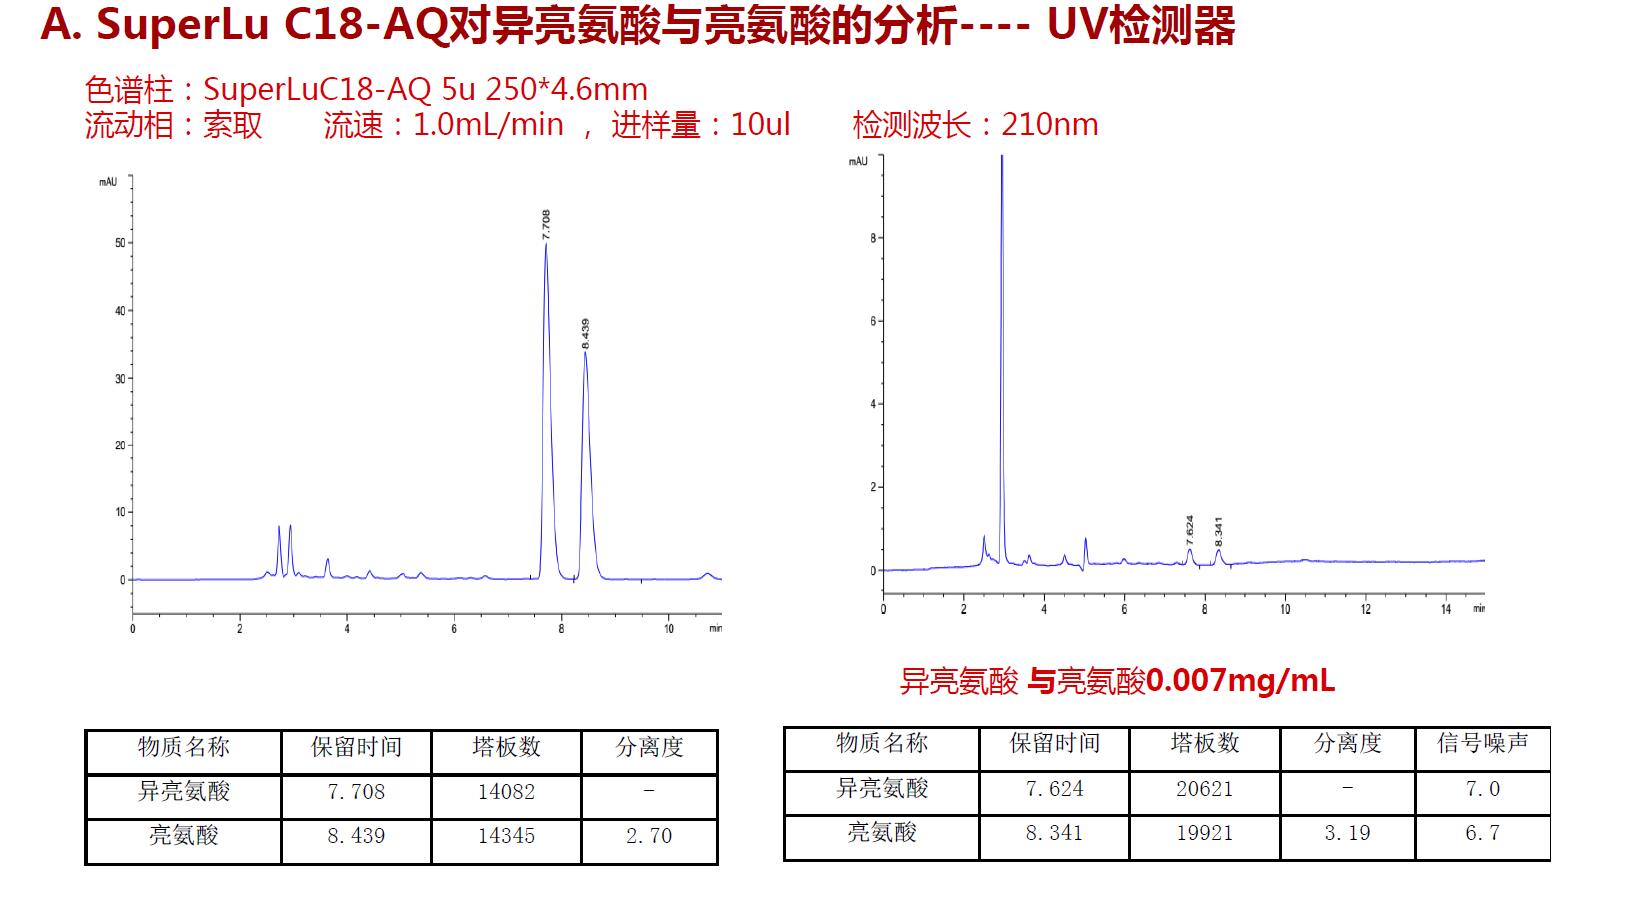 SuperLu C18 AQ对异亮氨酸与亮氨酸的分析UV检测器